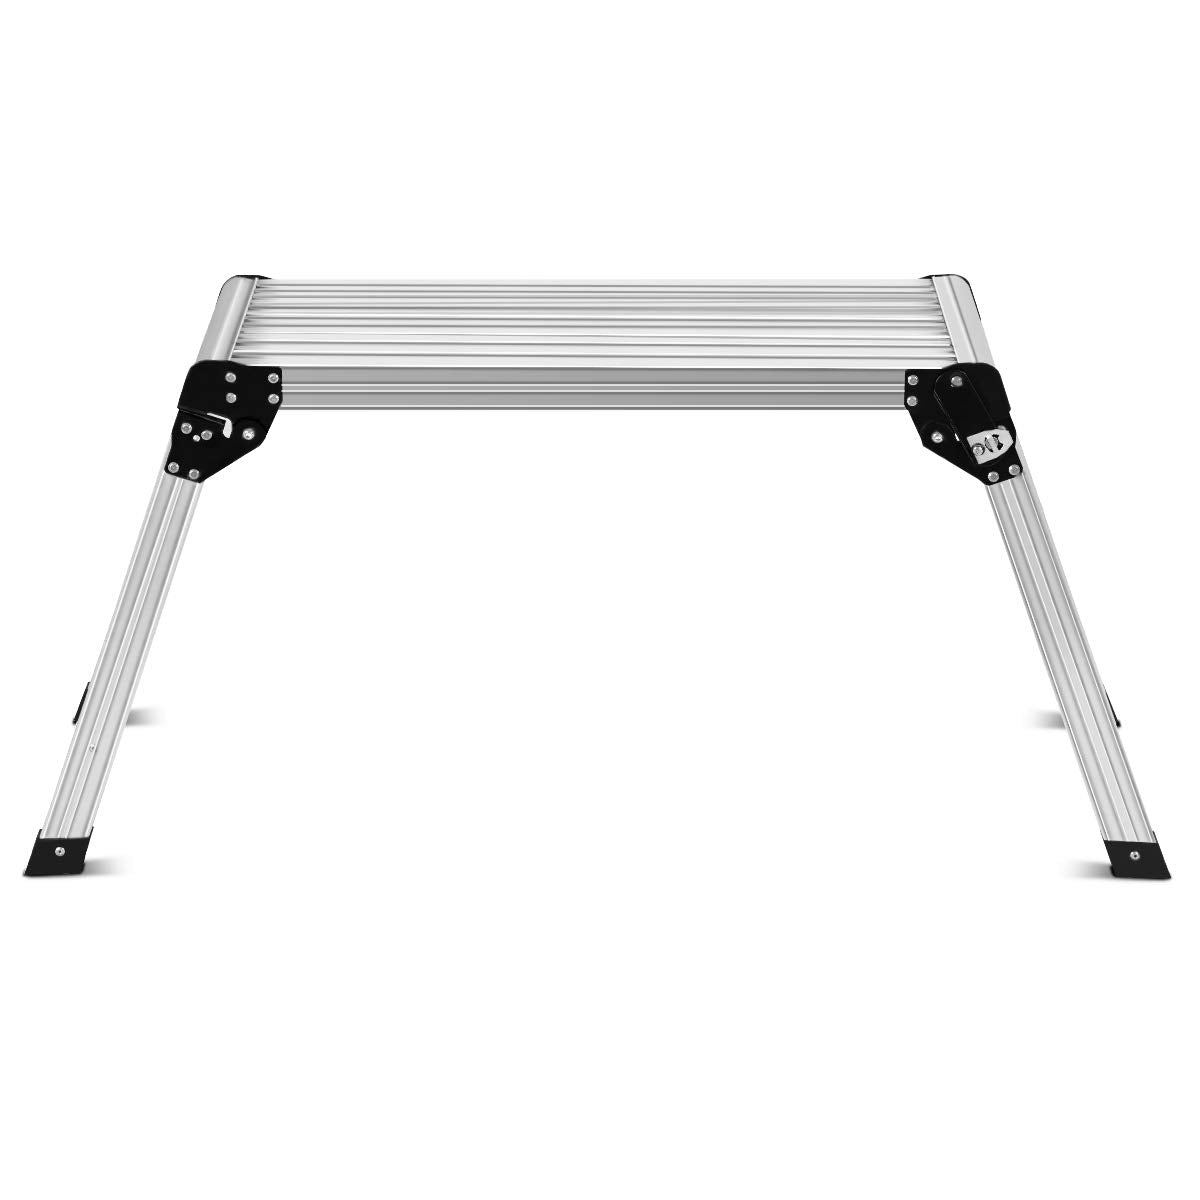 Giantex Capacity 330 LBS Heavy Duty Portable Bench Folding Ladders Stool w/Non-Slip Mat (Silver)